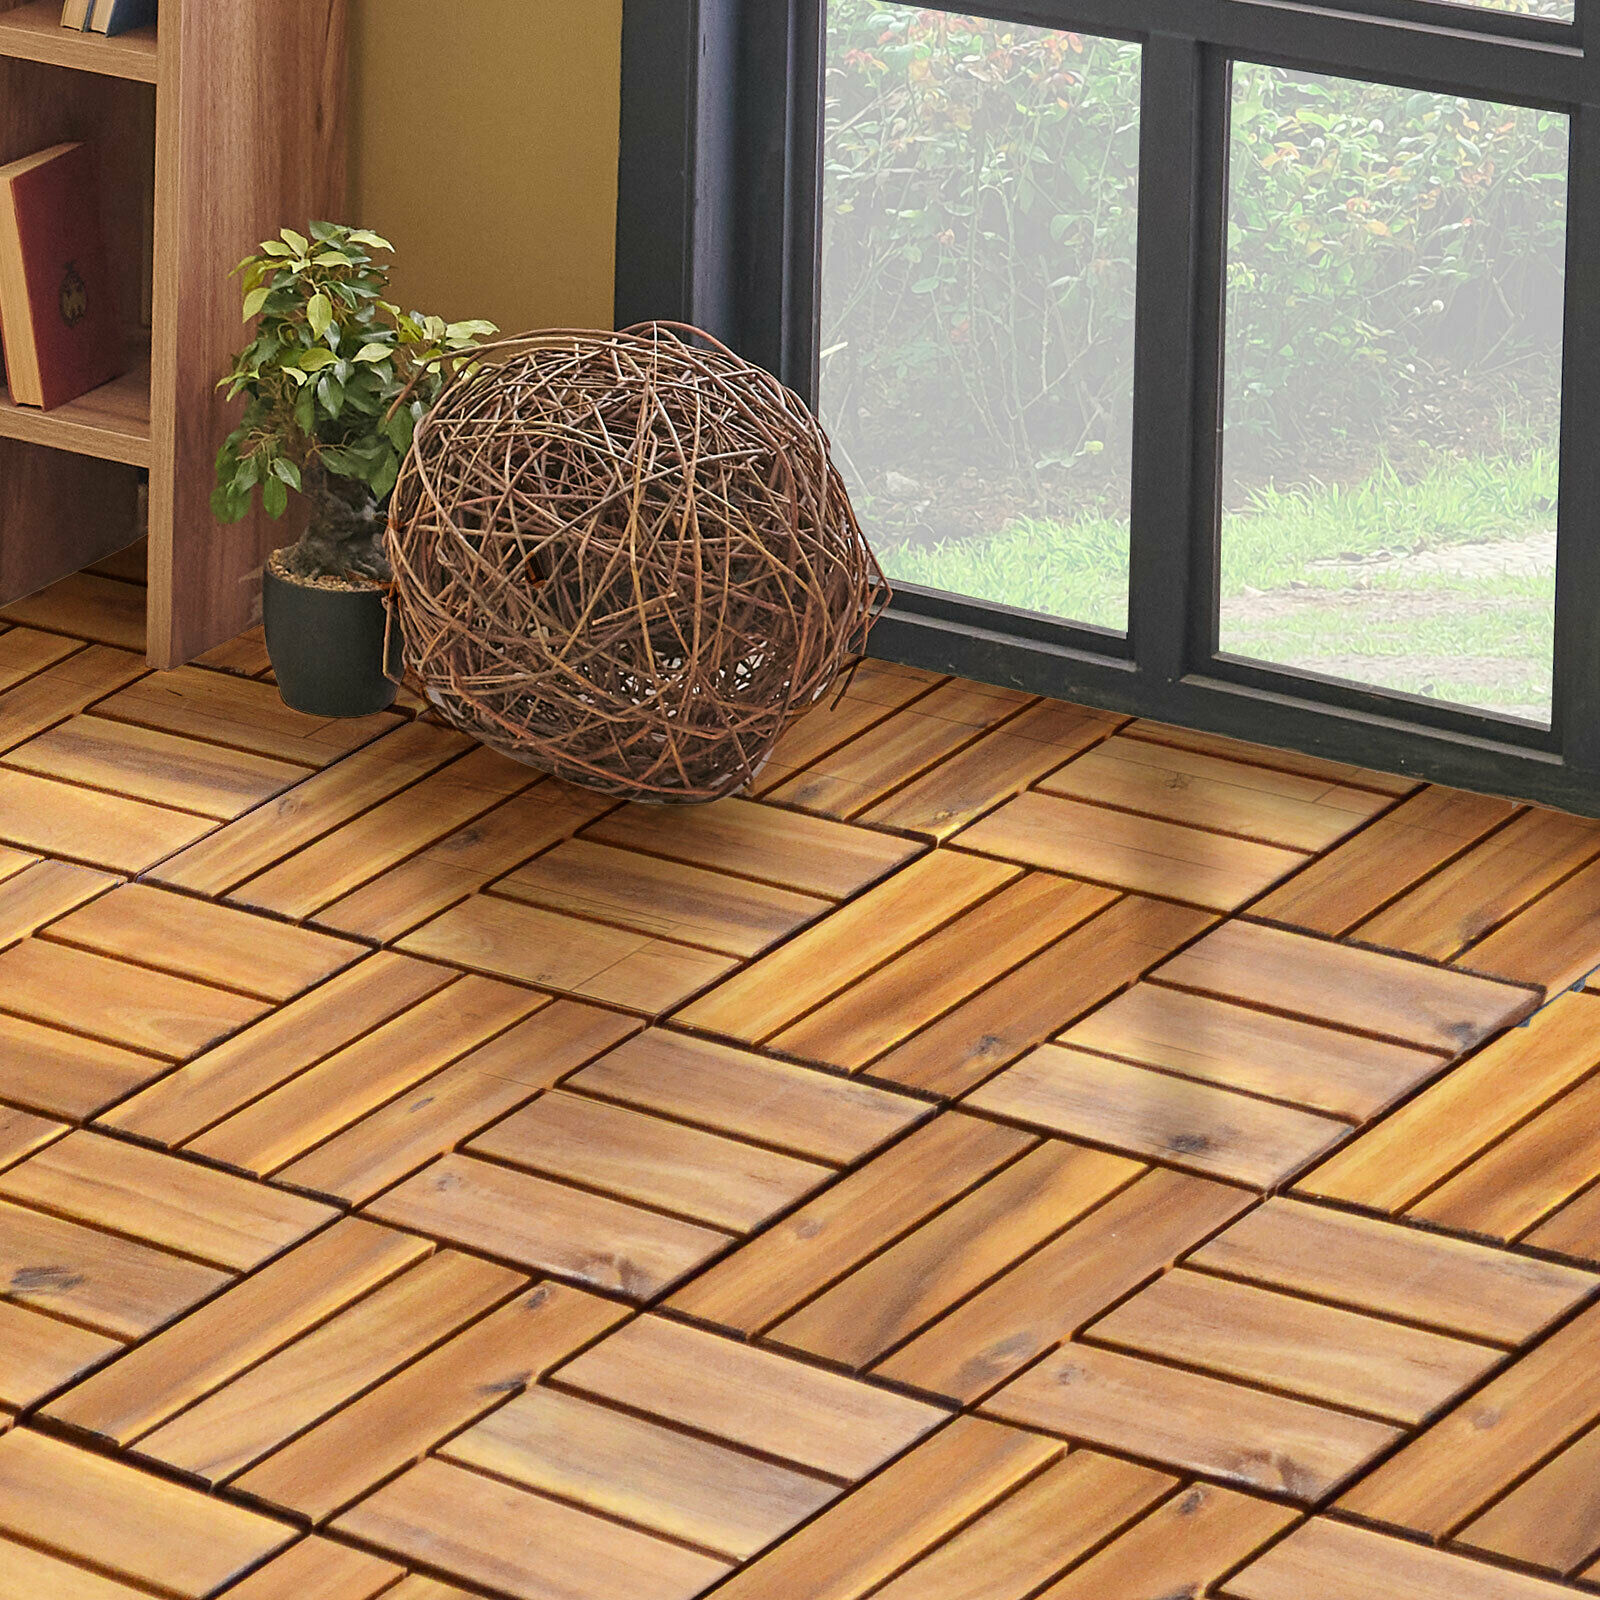 Patiojoy 27PCS Patio Interlocking Tiles Acacia Slat Wood Garden Indoor &Outdoor - image 3 of 8